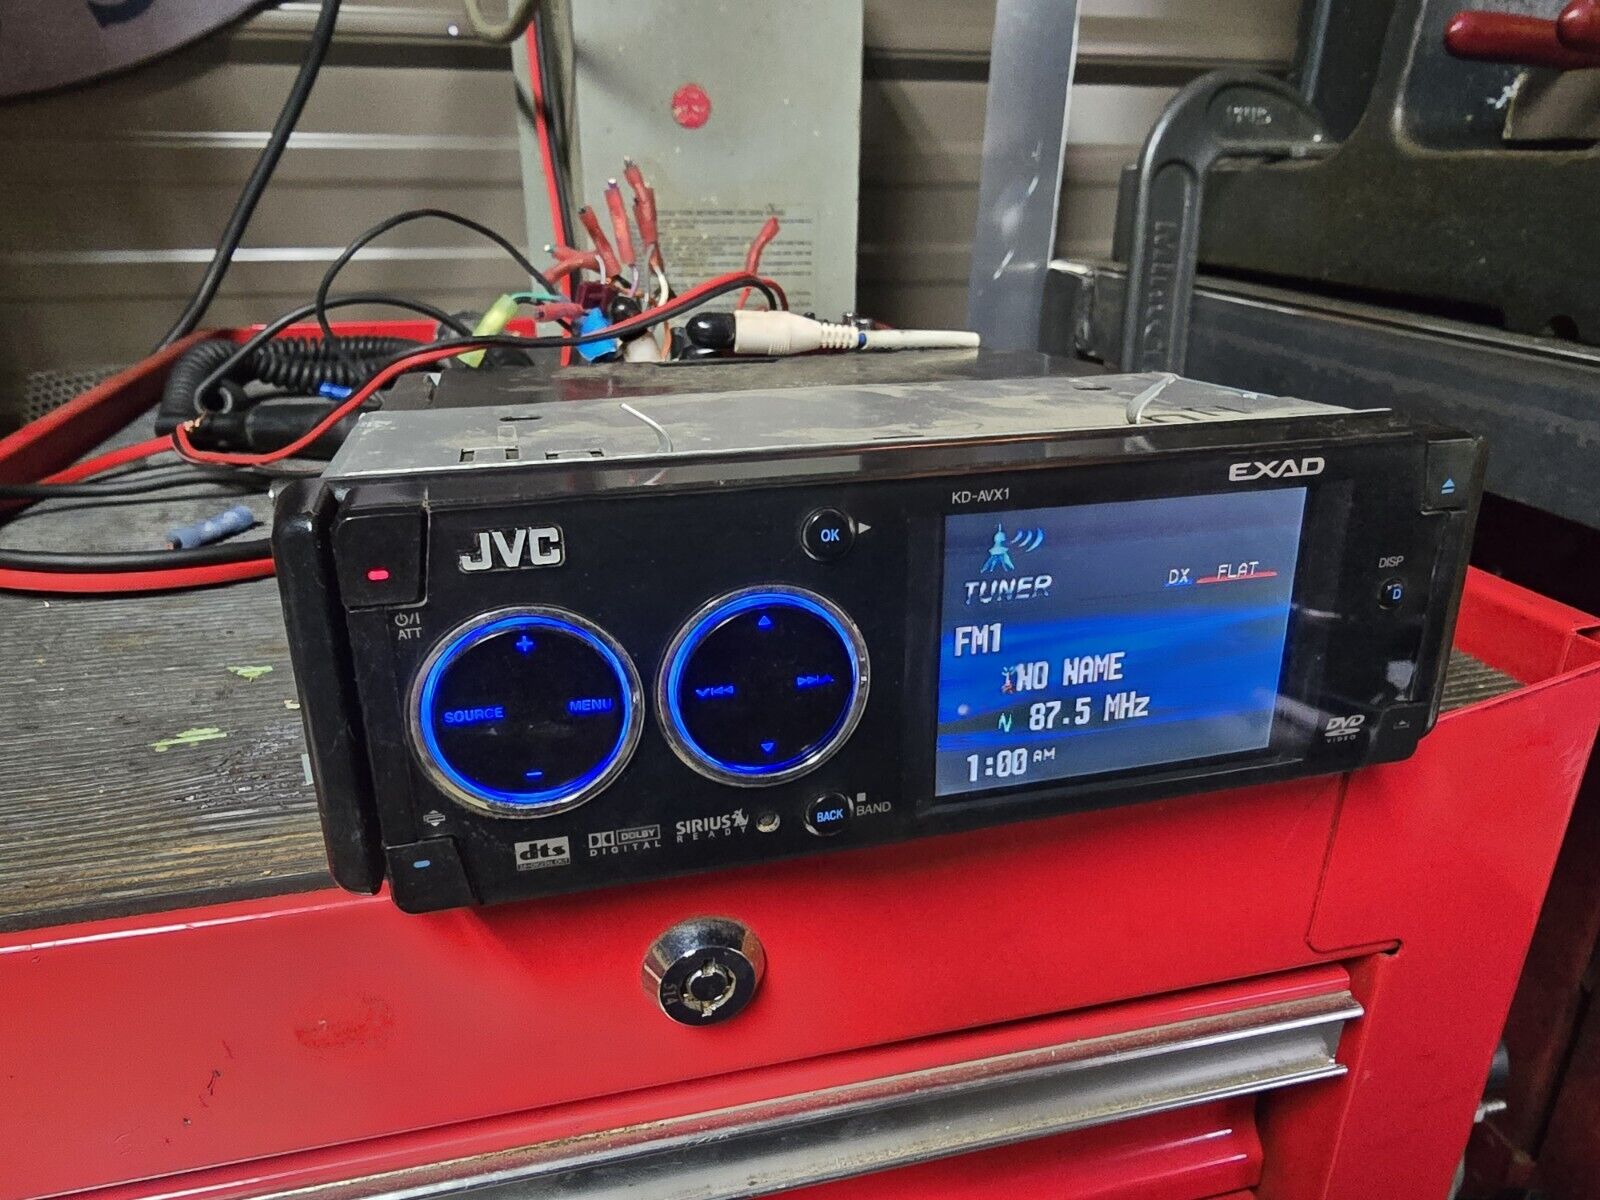 JVC KD-AVX1 EXAD MP3 DVD CD Radio player Multimedia motorized panel Old School